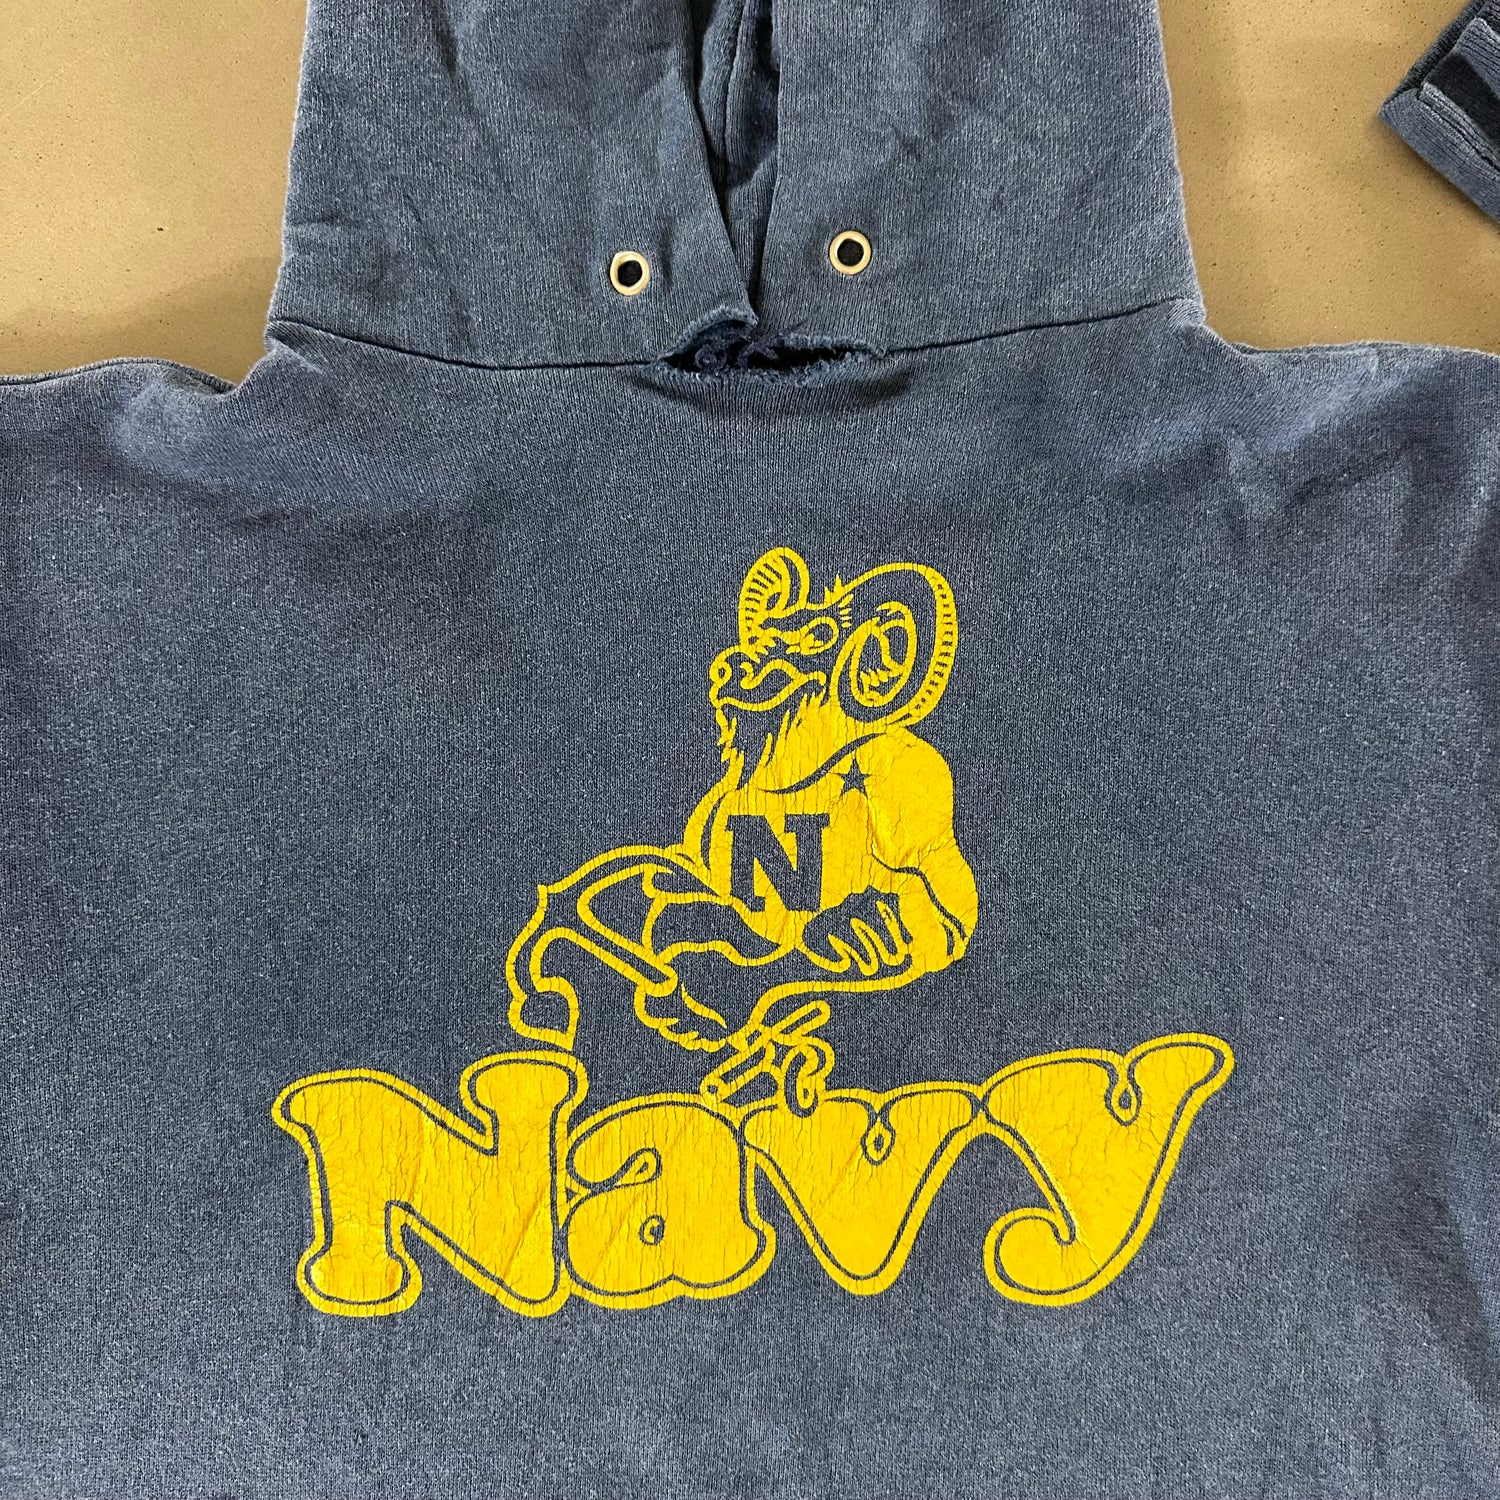 Vintage 1980s Navy Sweatshirt size Medium